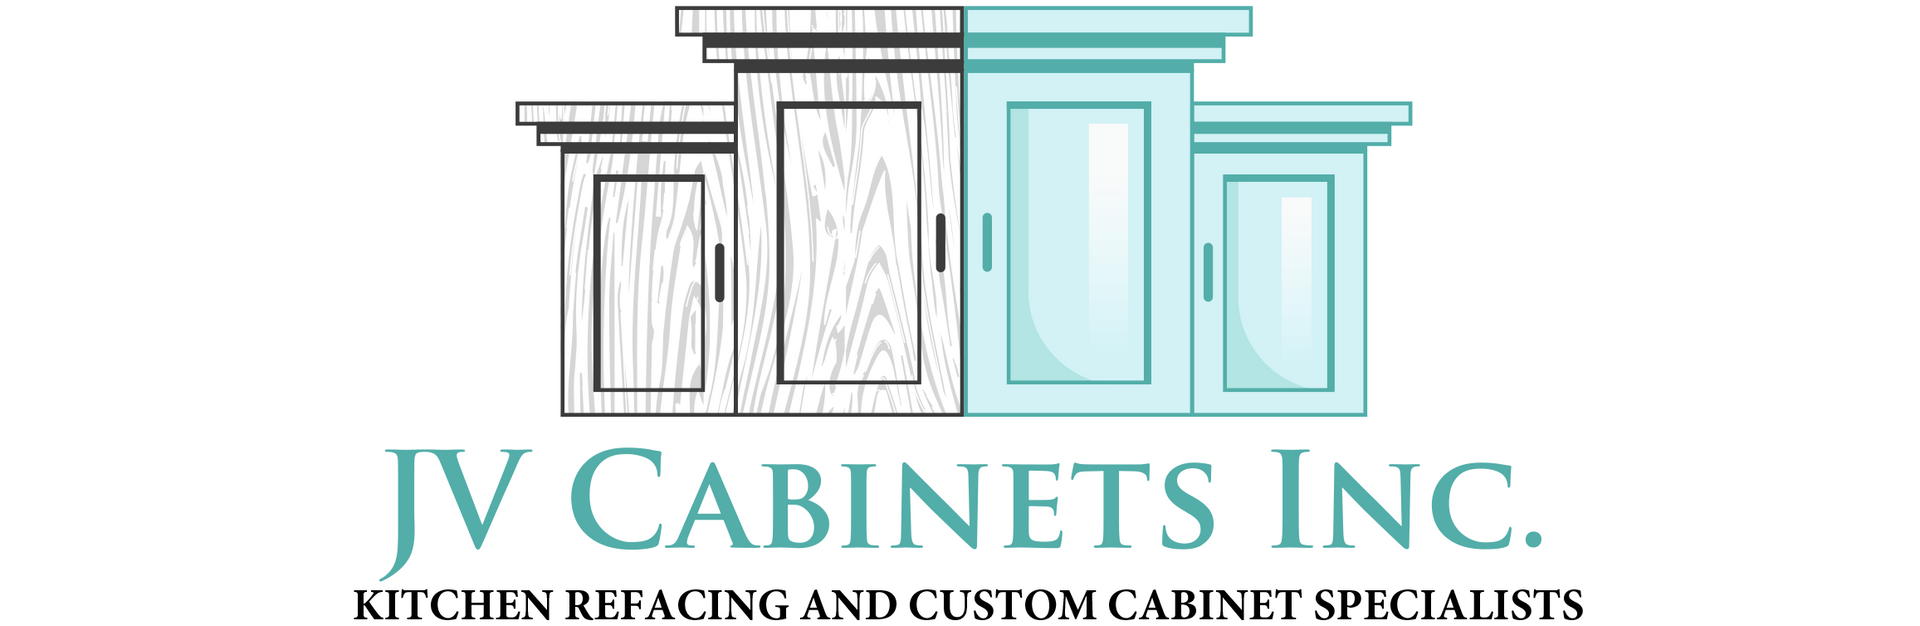 JV Cabinet Makers Inc